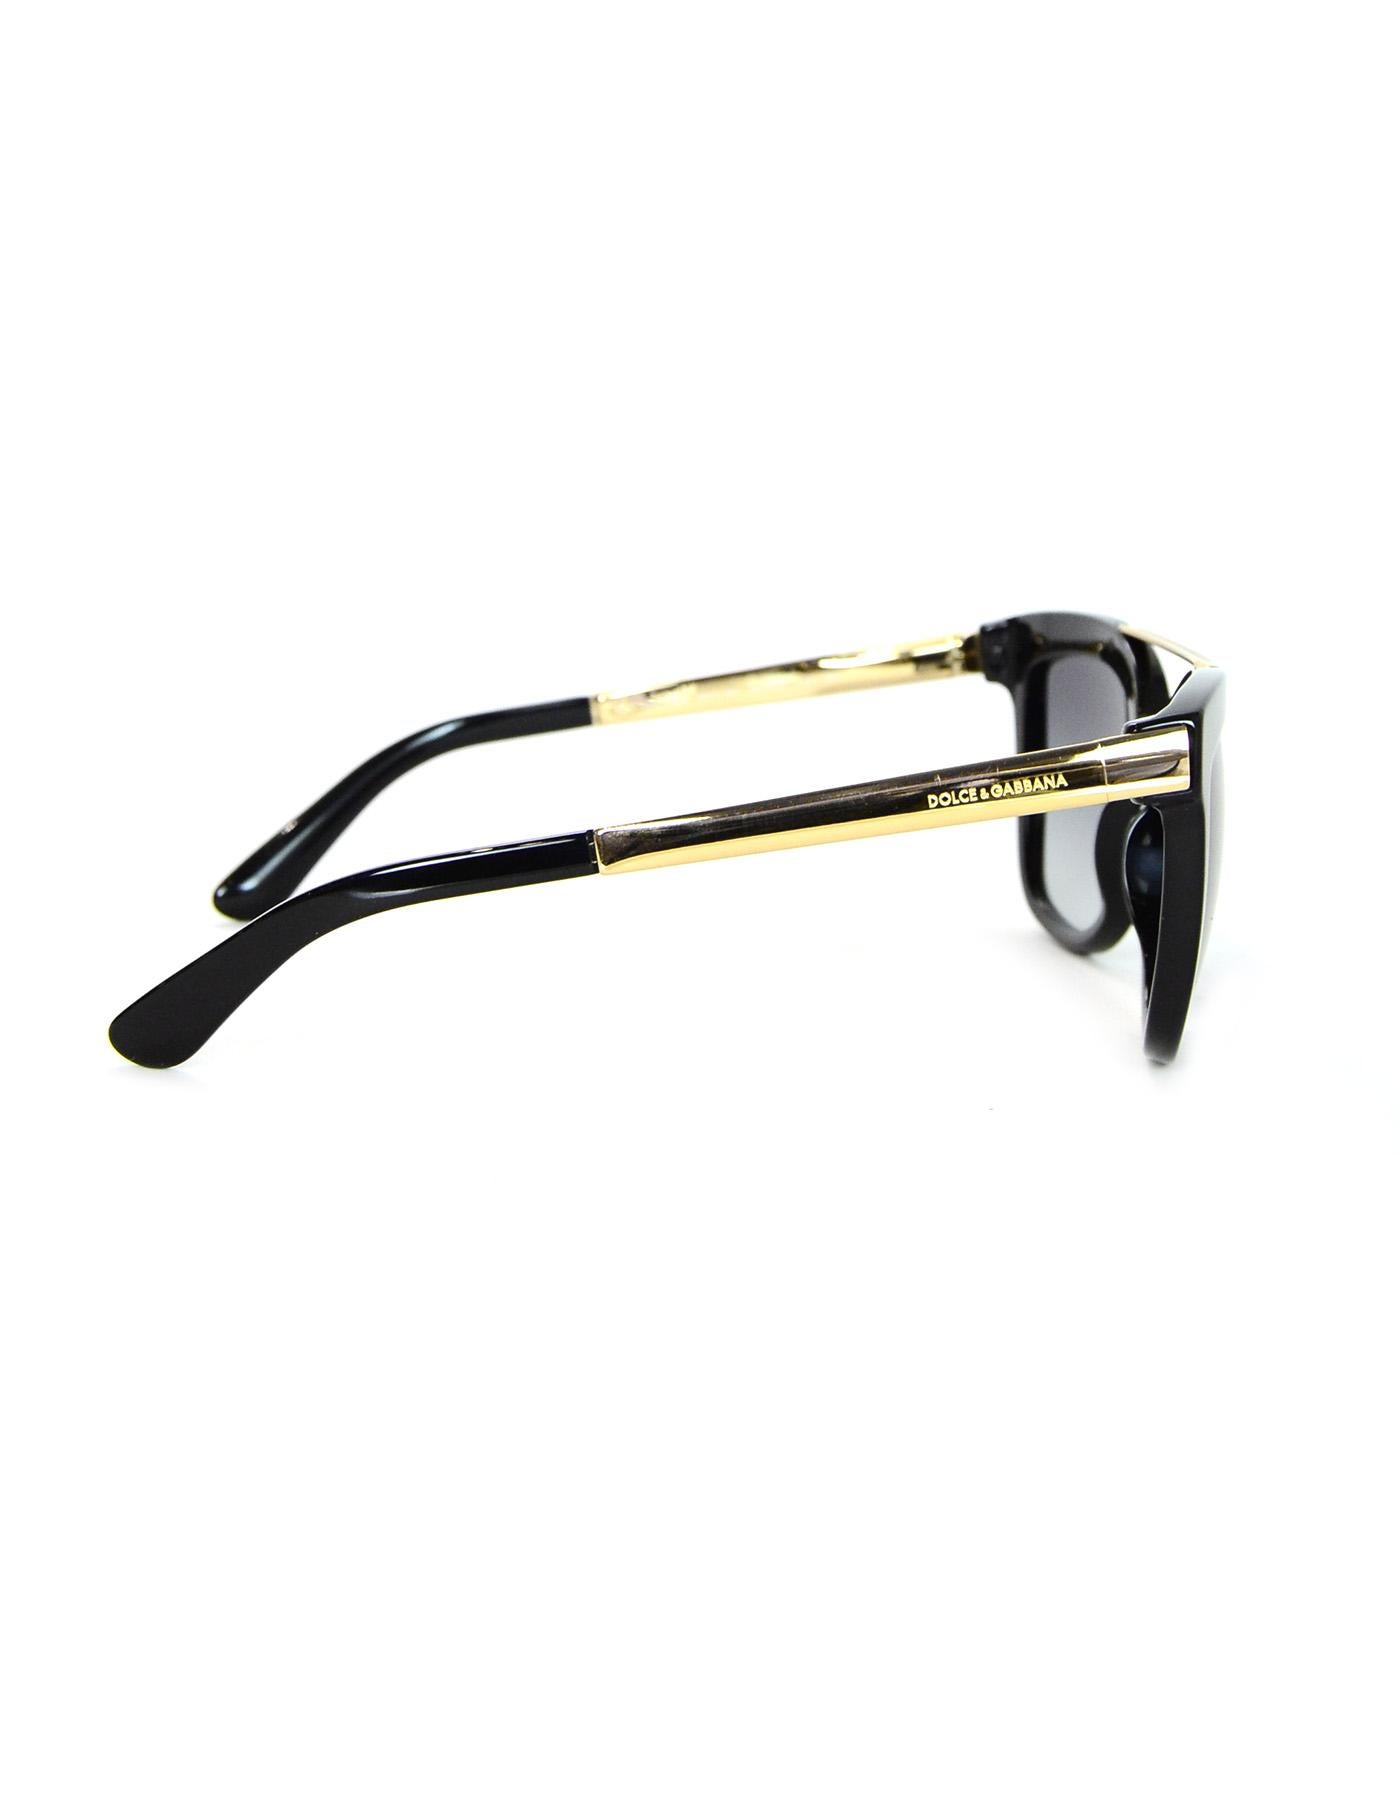 Dolce & Gabbana DG 4269 Black Resin Sunglasses w/ Top Goldtone Bar 1